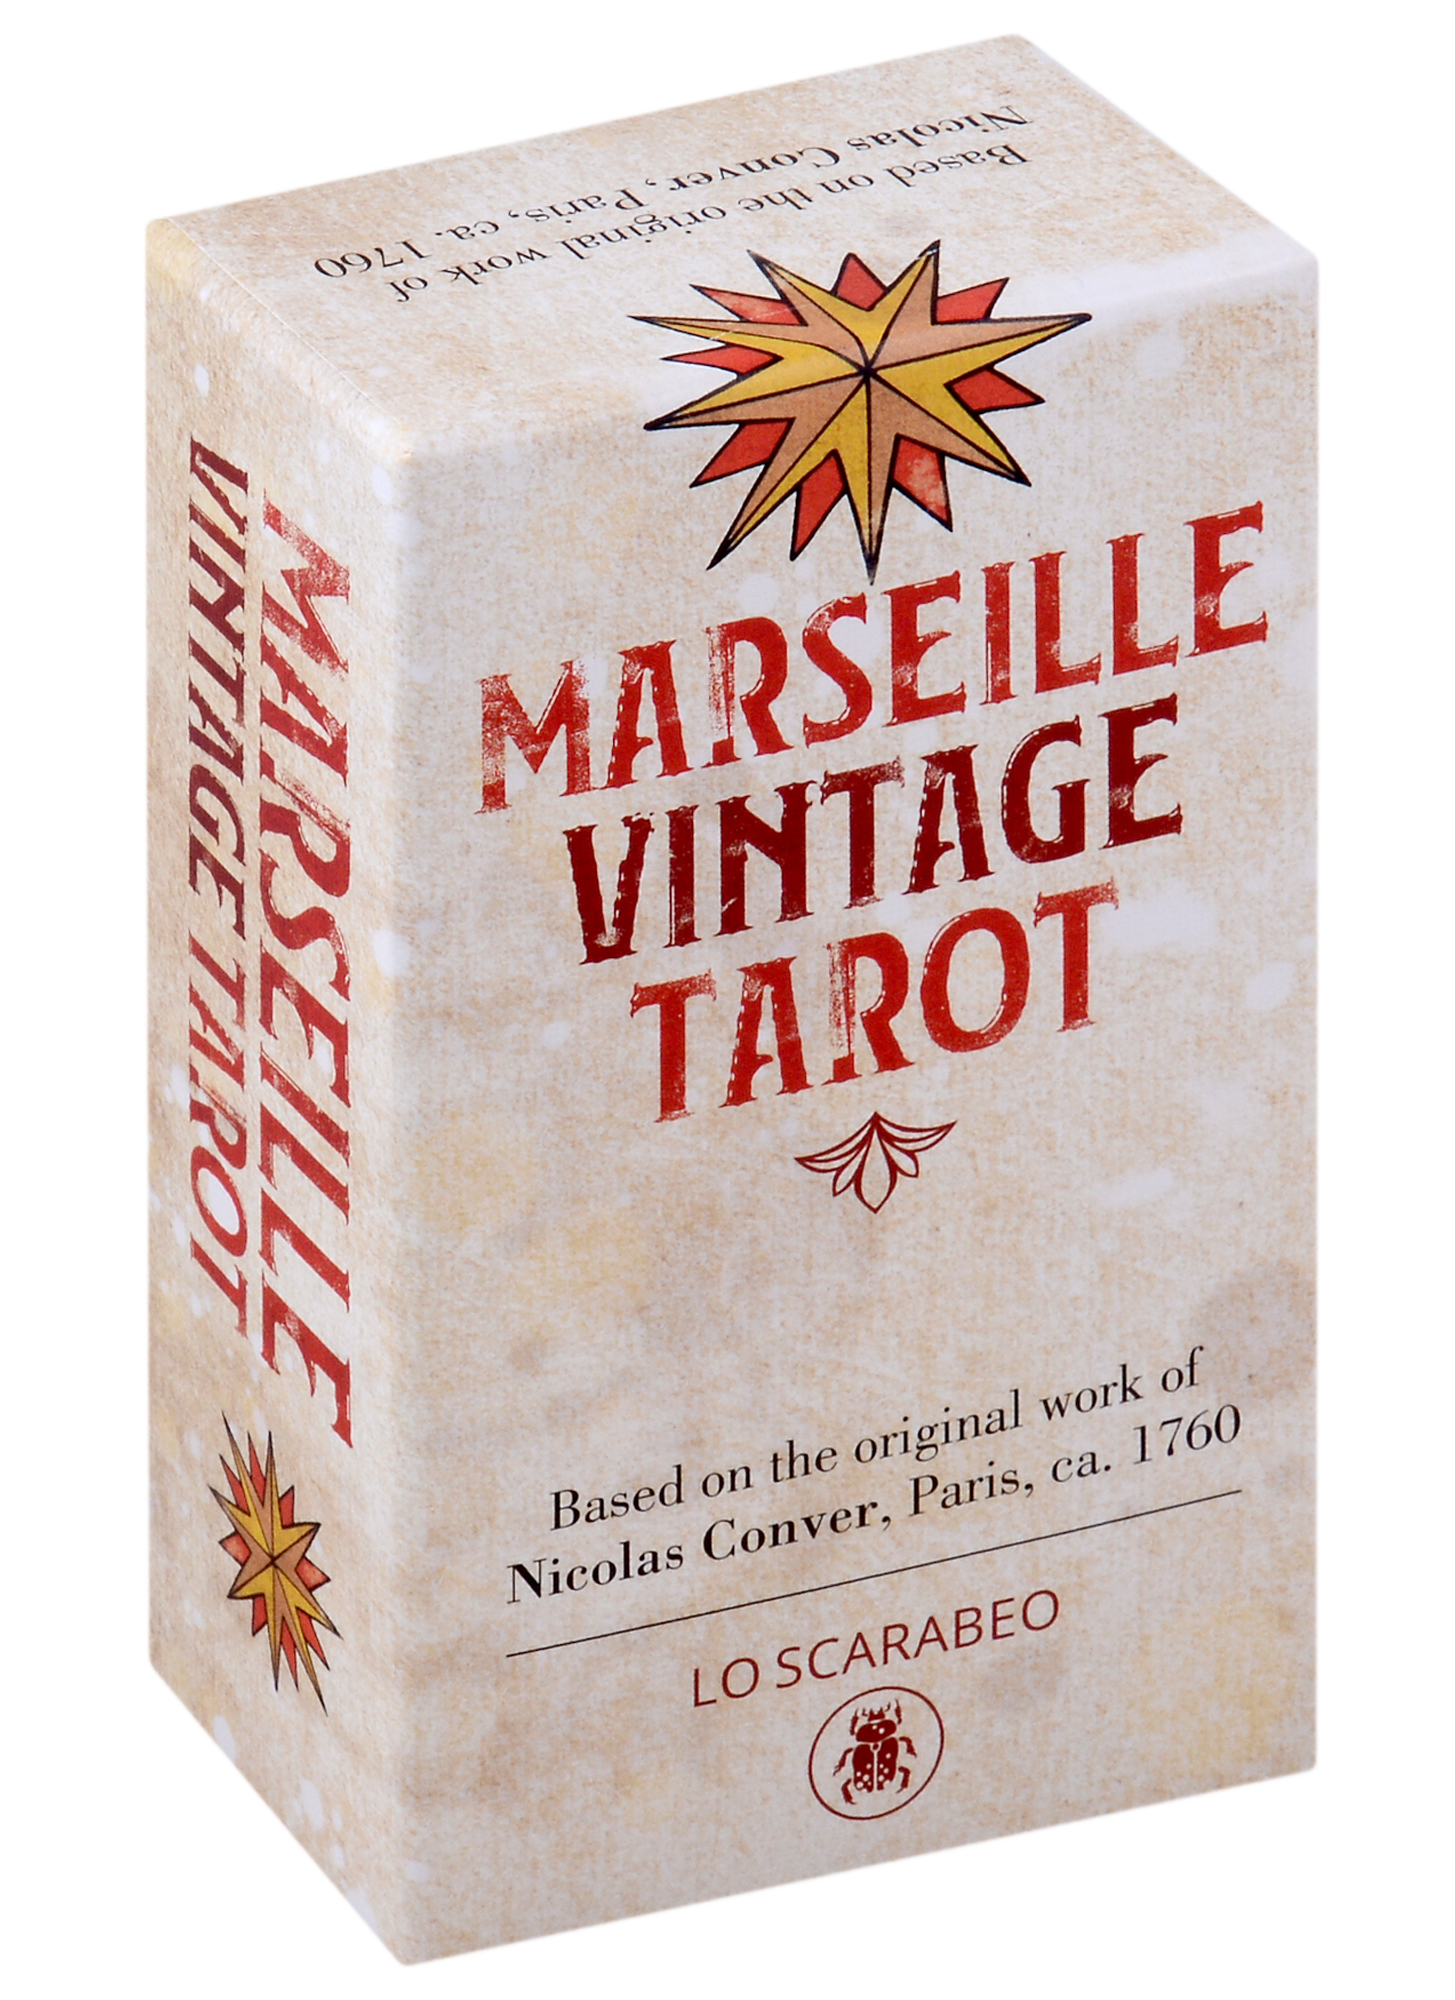 морсуччи анна мария оттолини маттео таро марсельское 78 карт Marseille Vintage Tarot (78 Cards with Instructions)